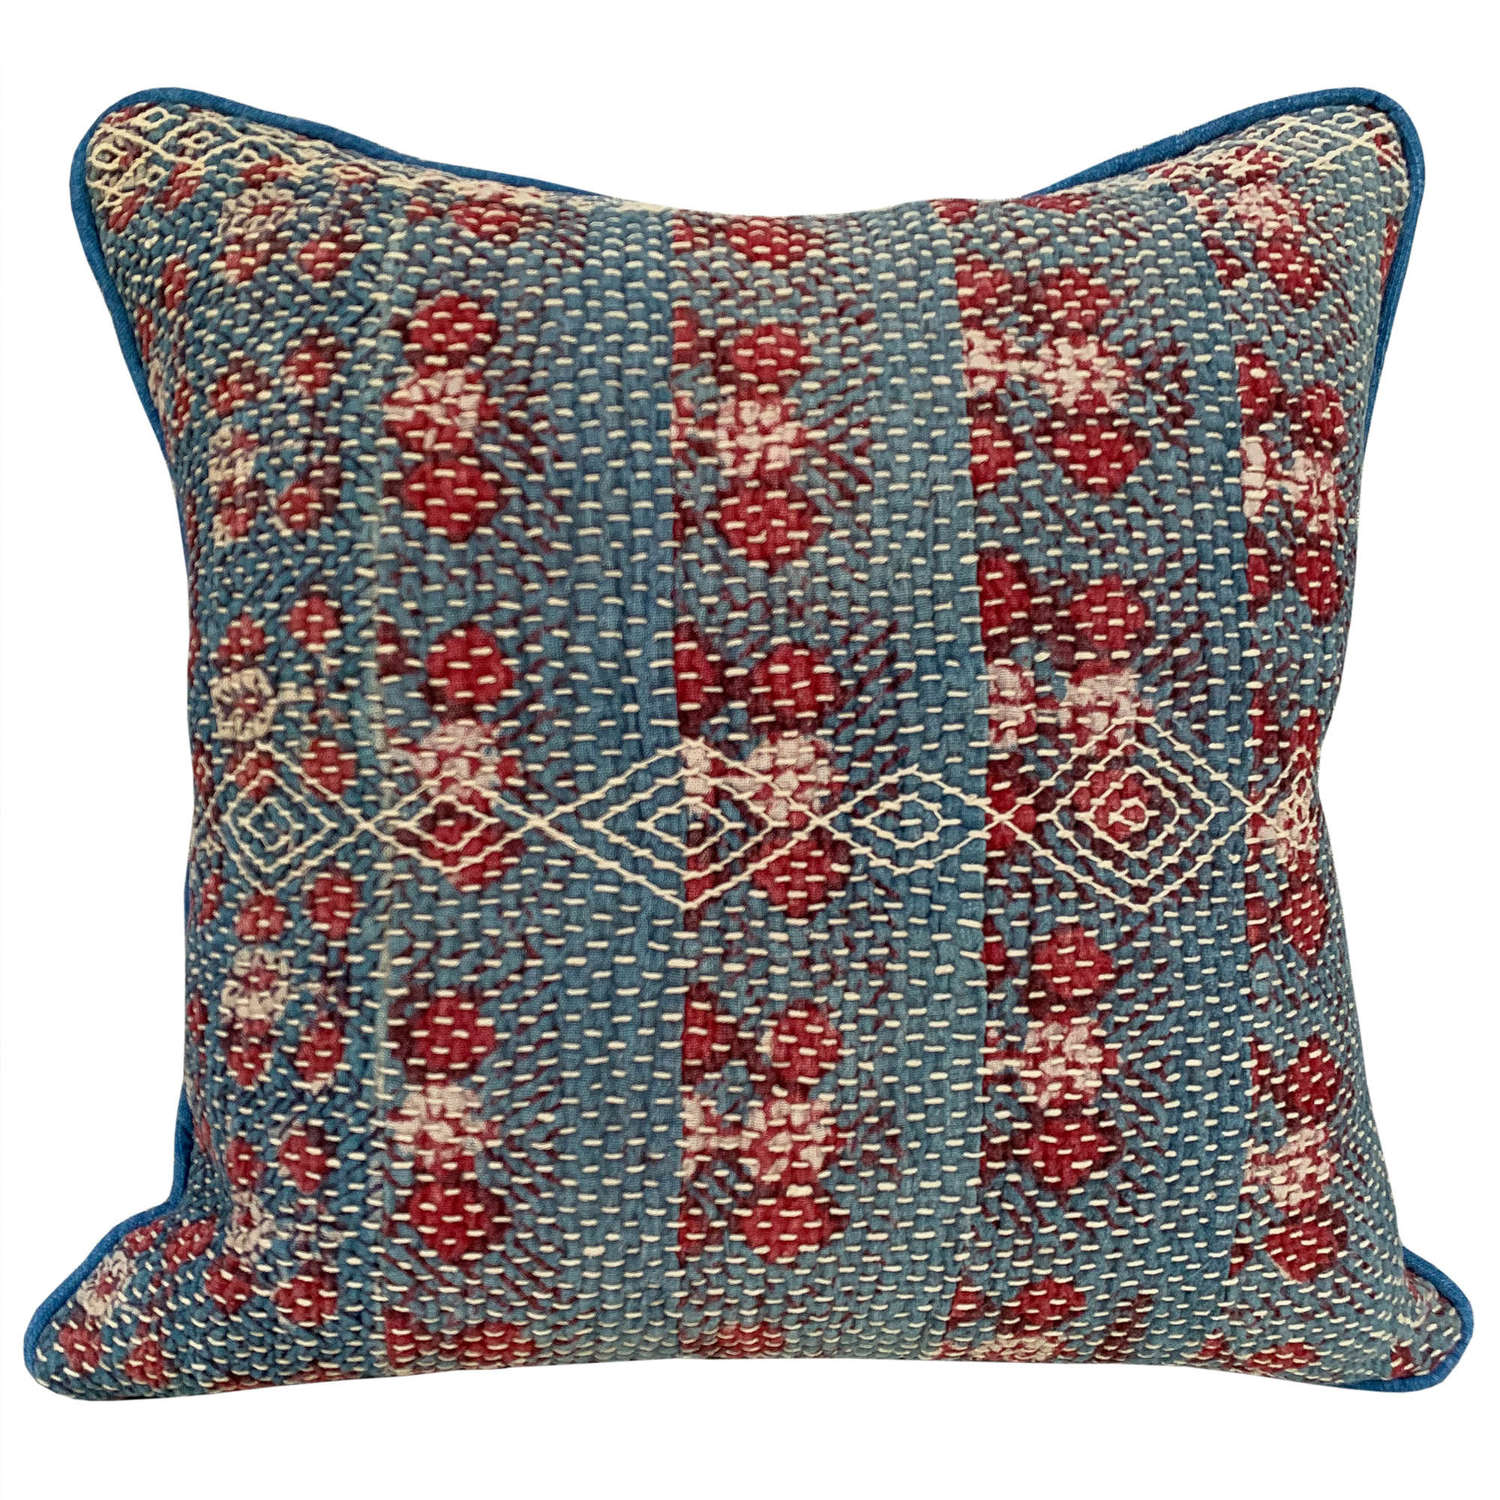 Pale indigo Banjara cushions